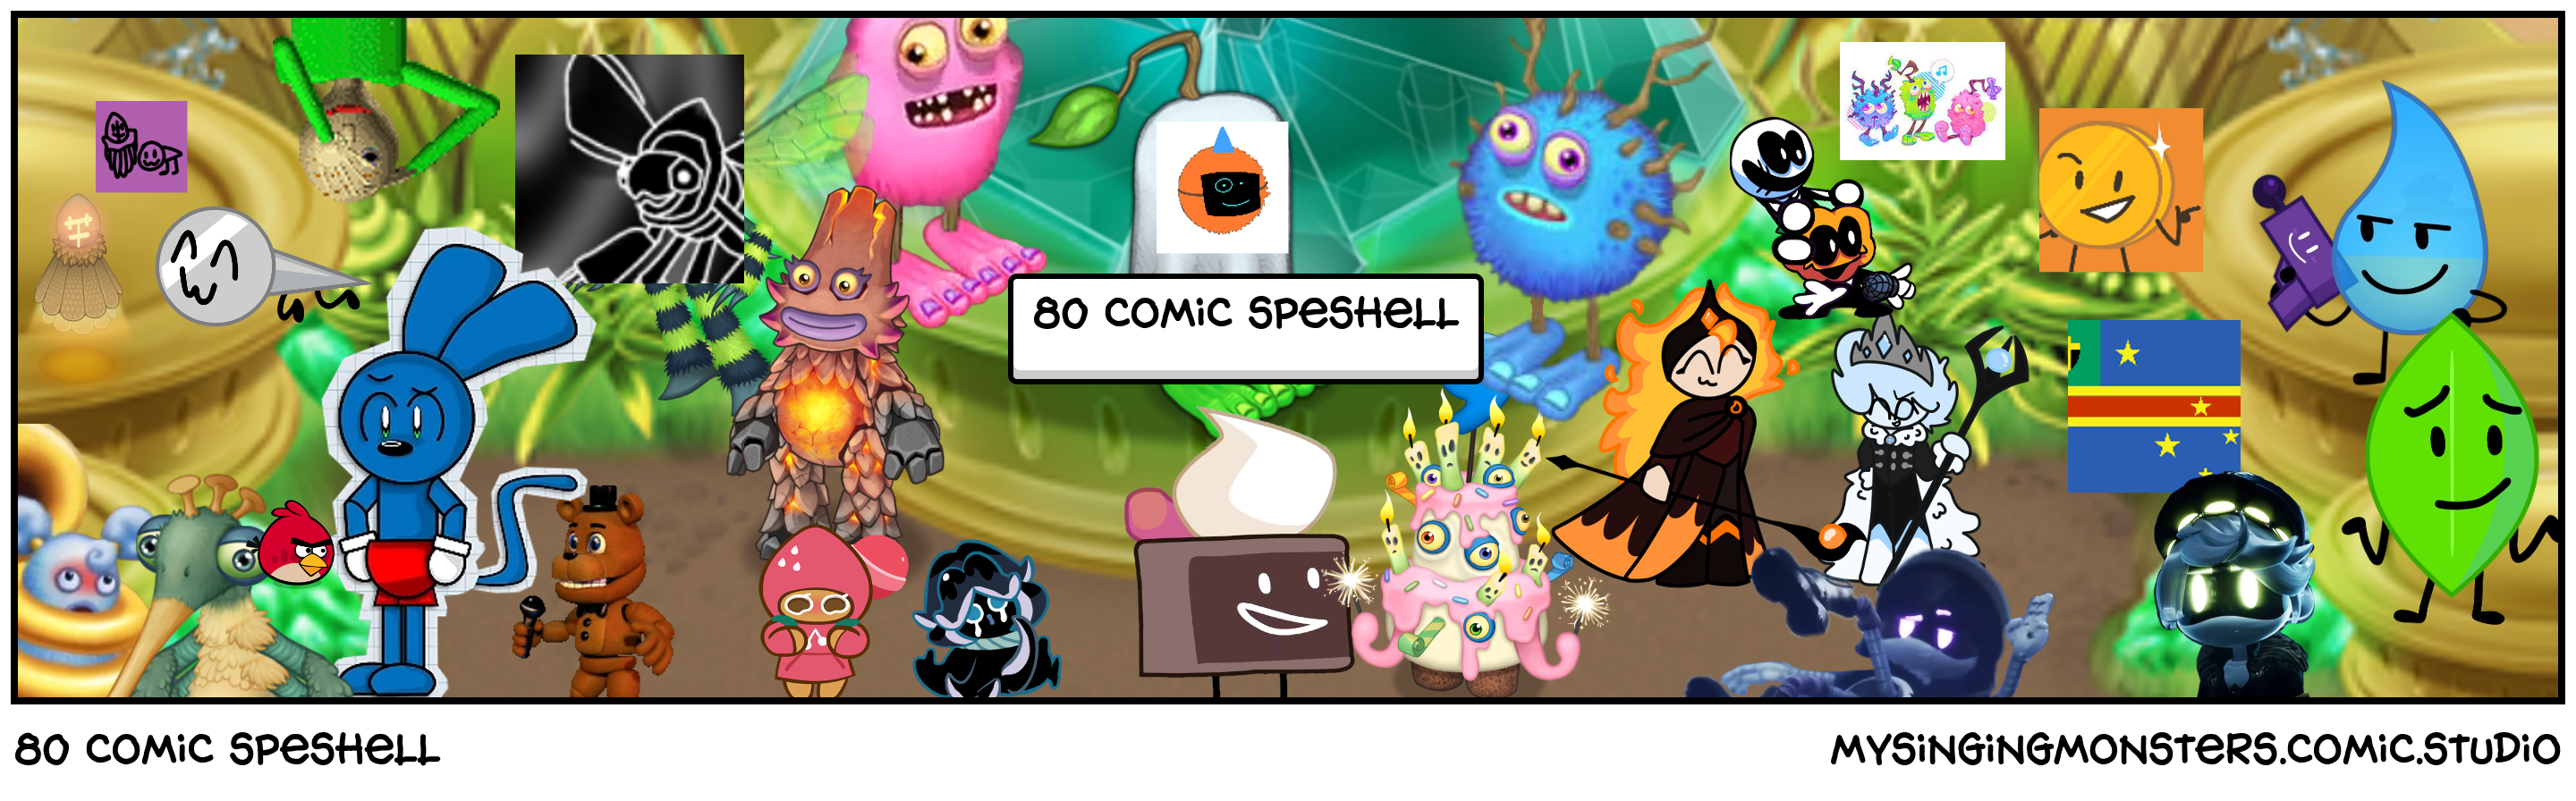 80 comic speshell